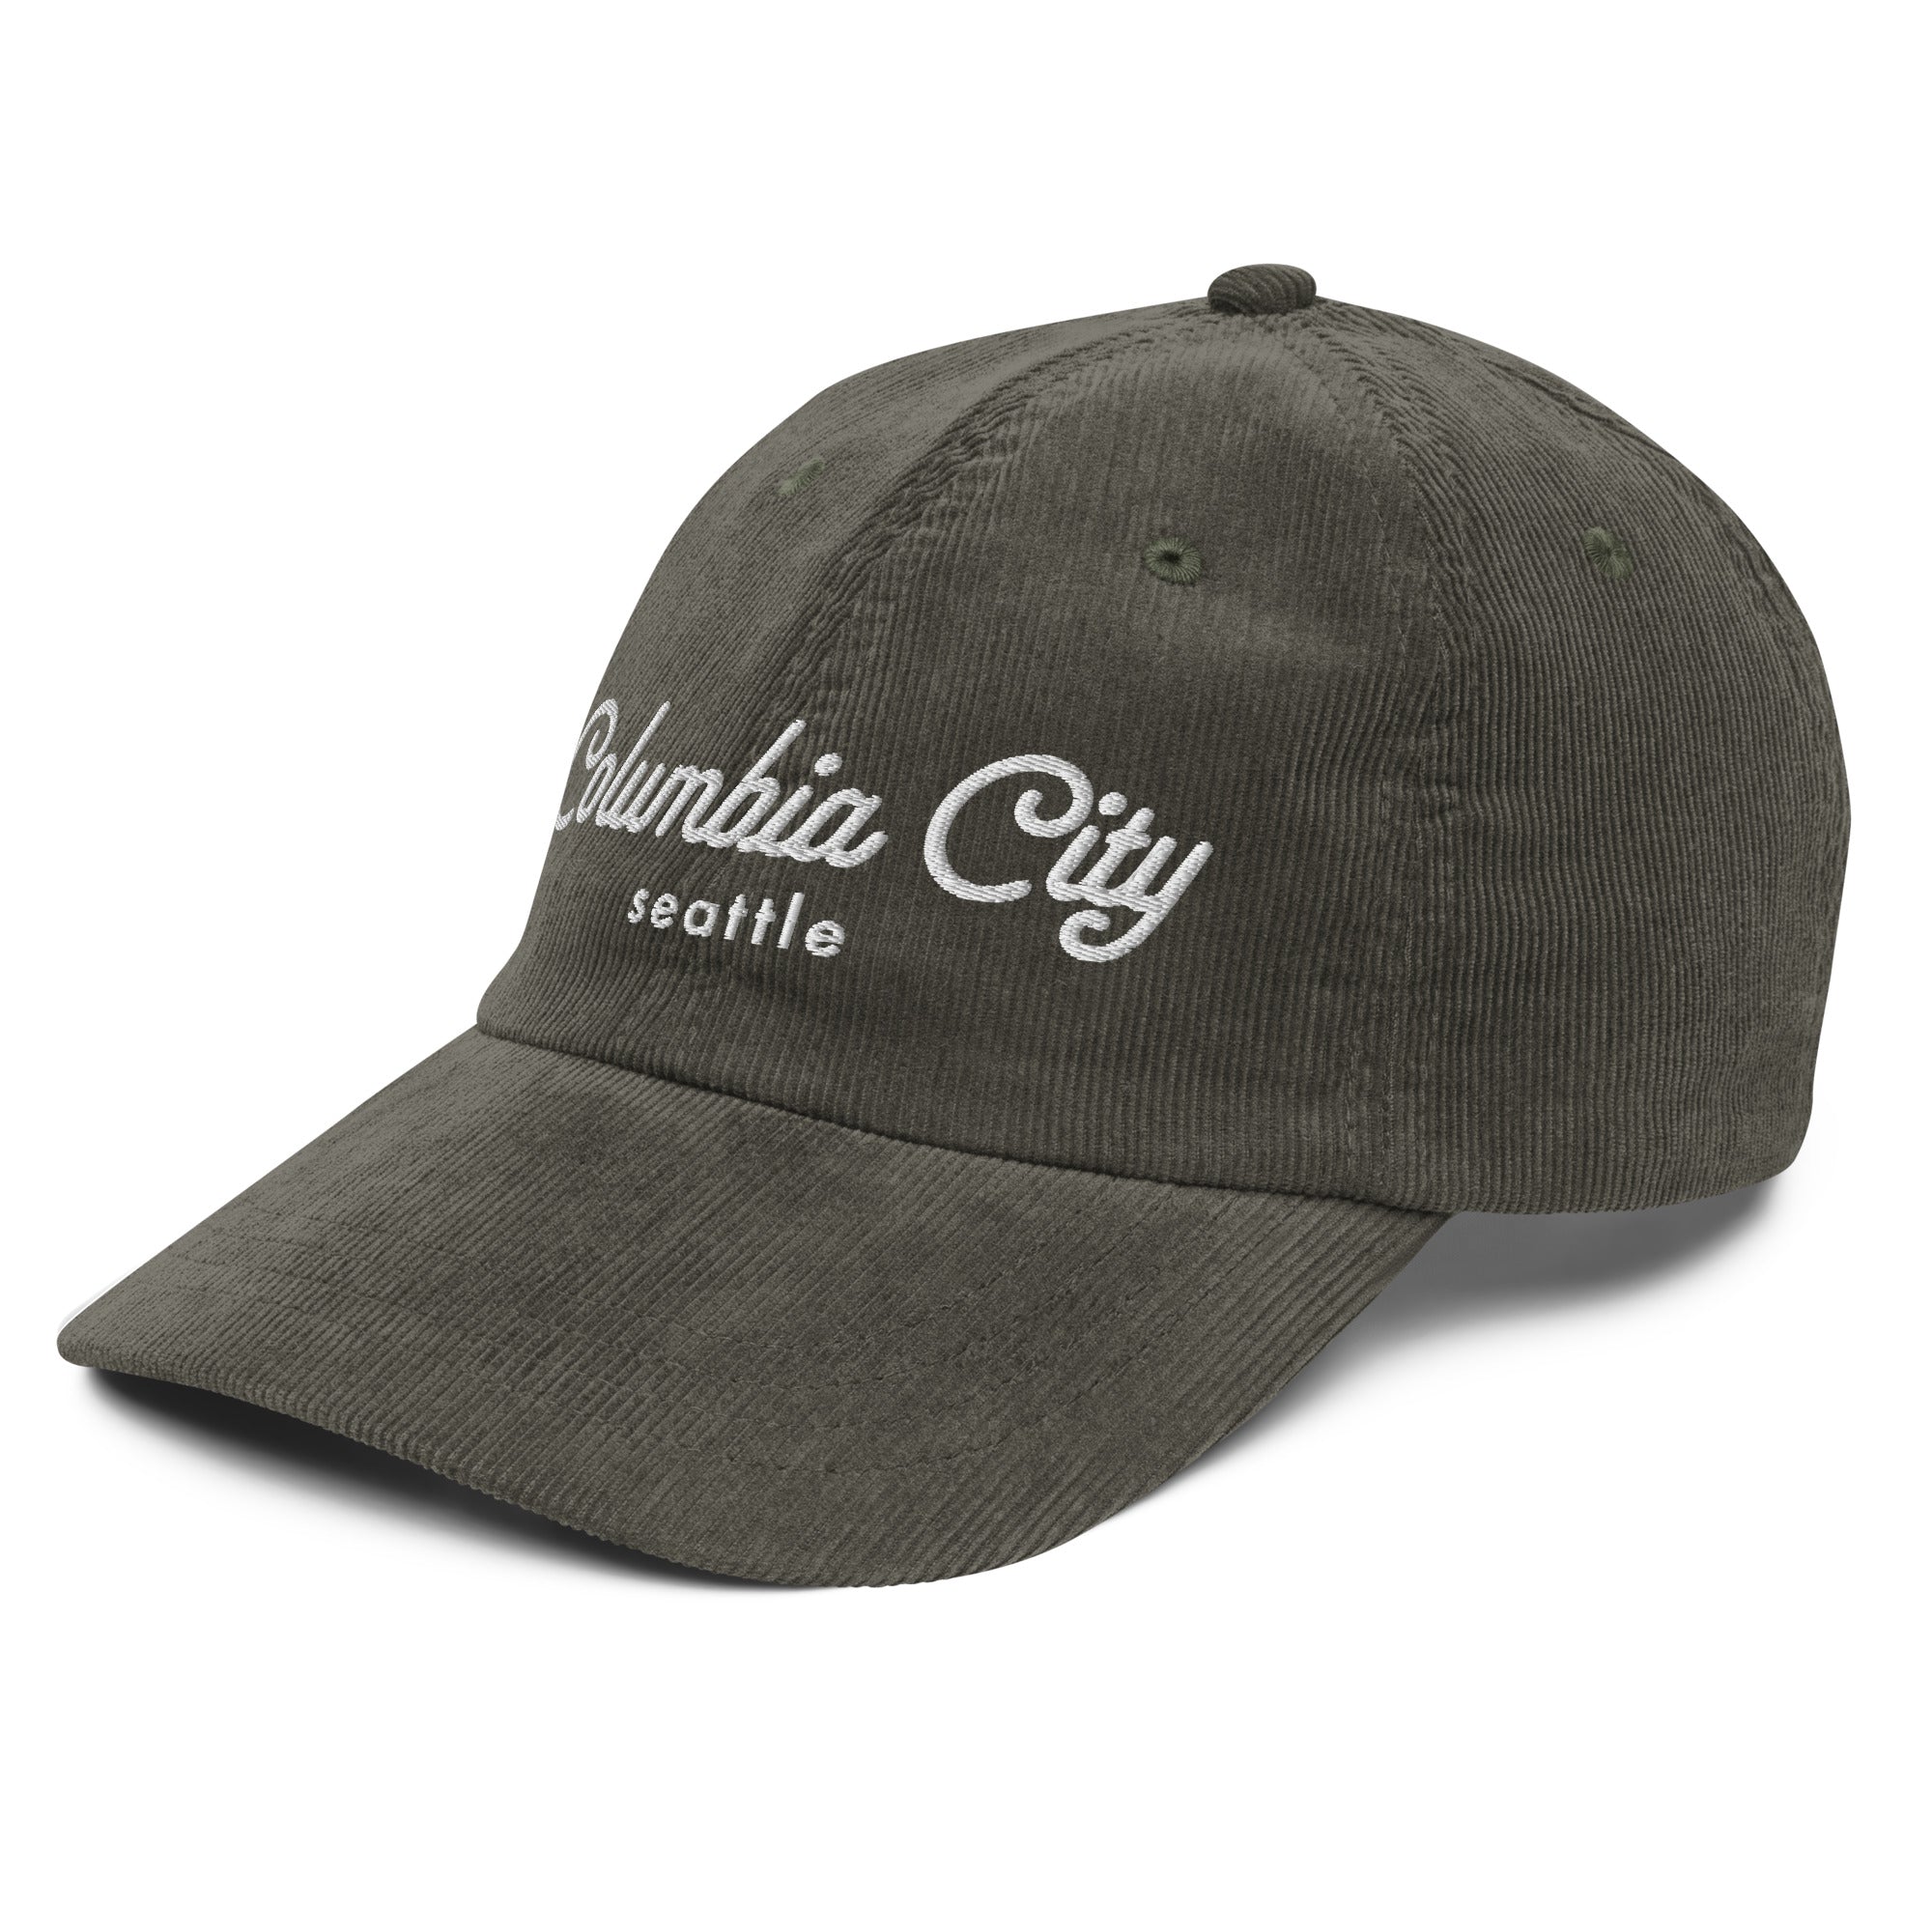 Script Corduroy Hat - Columbia City | Seattle, WA